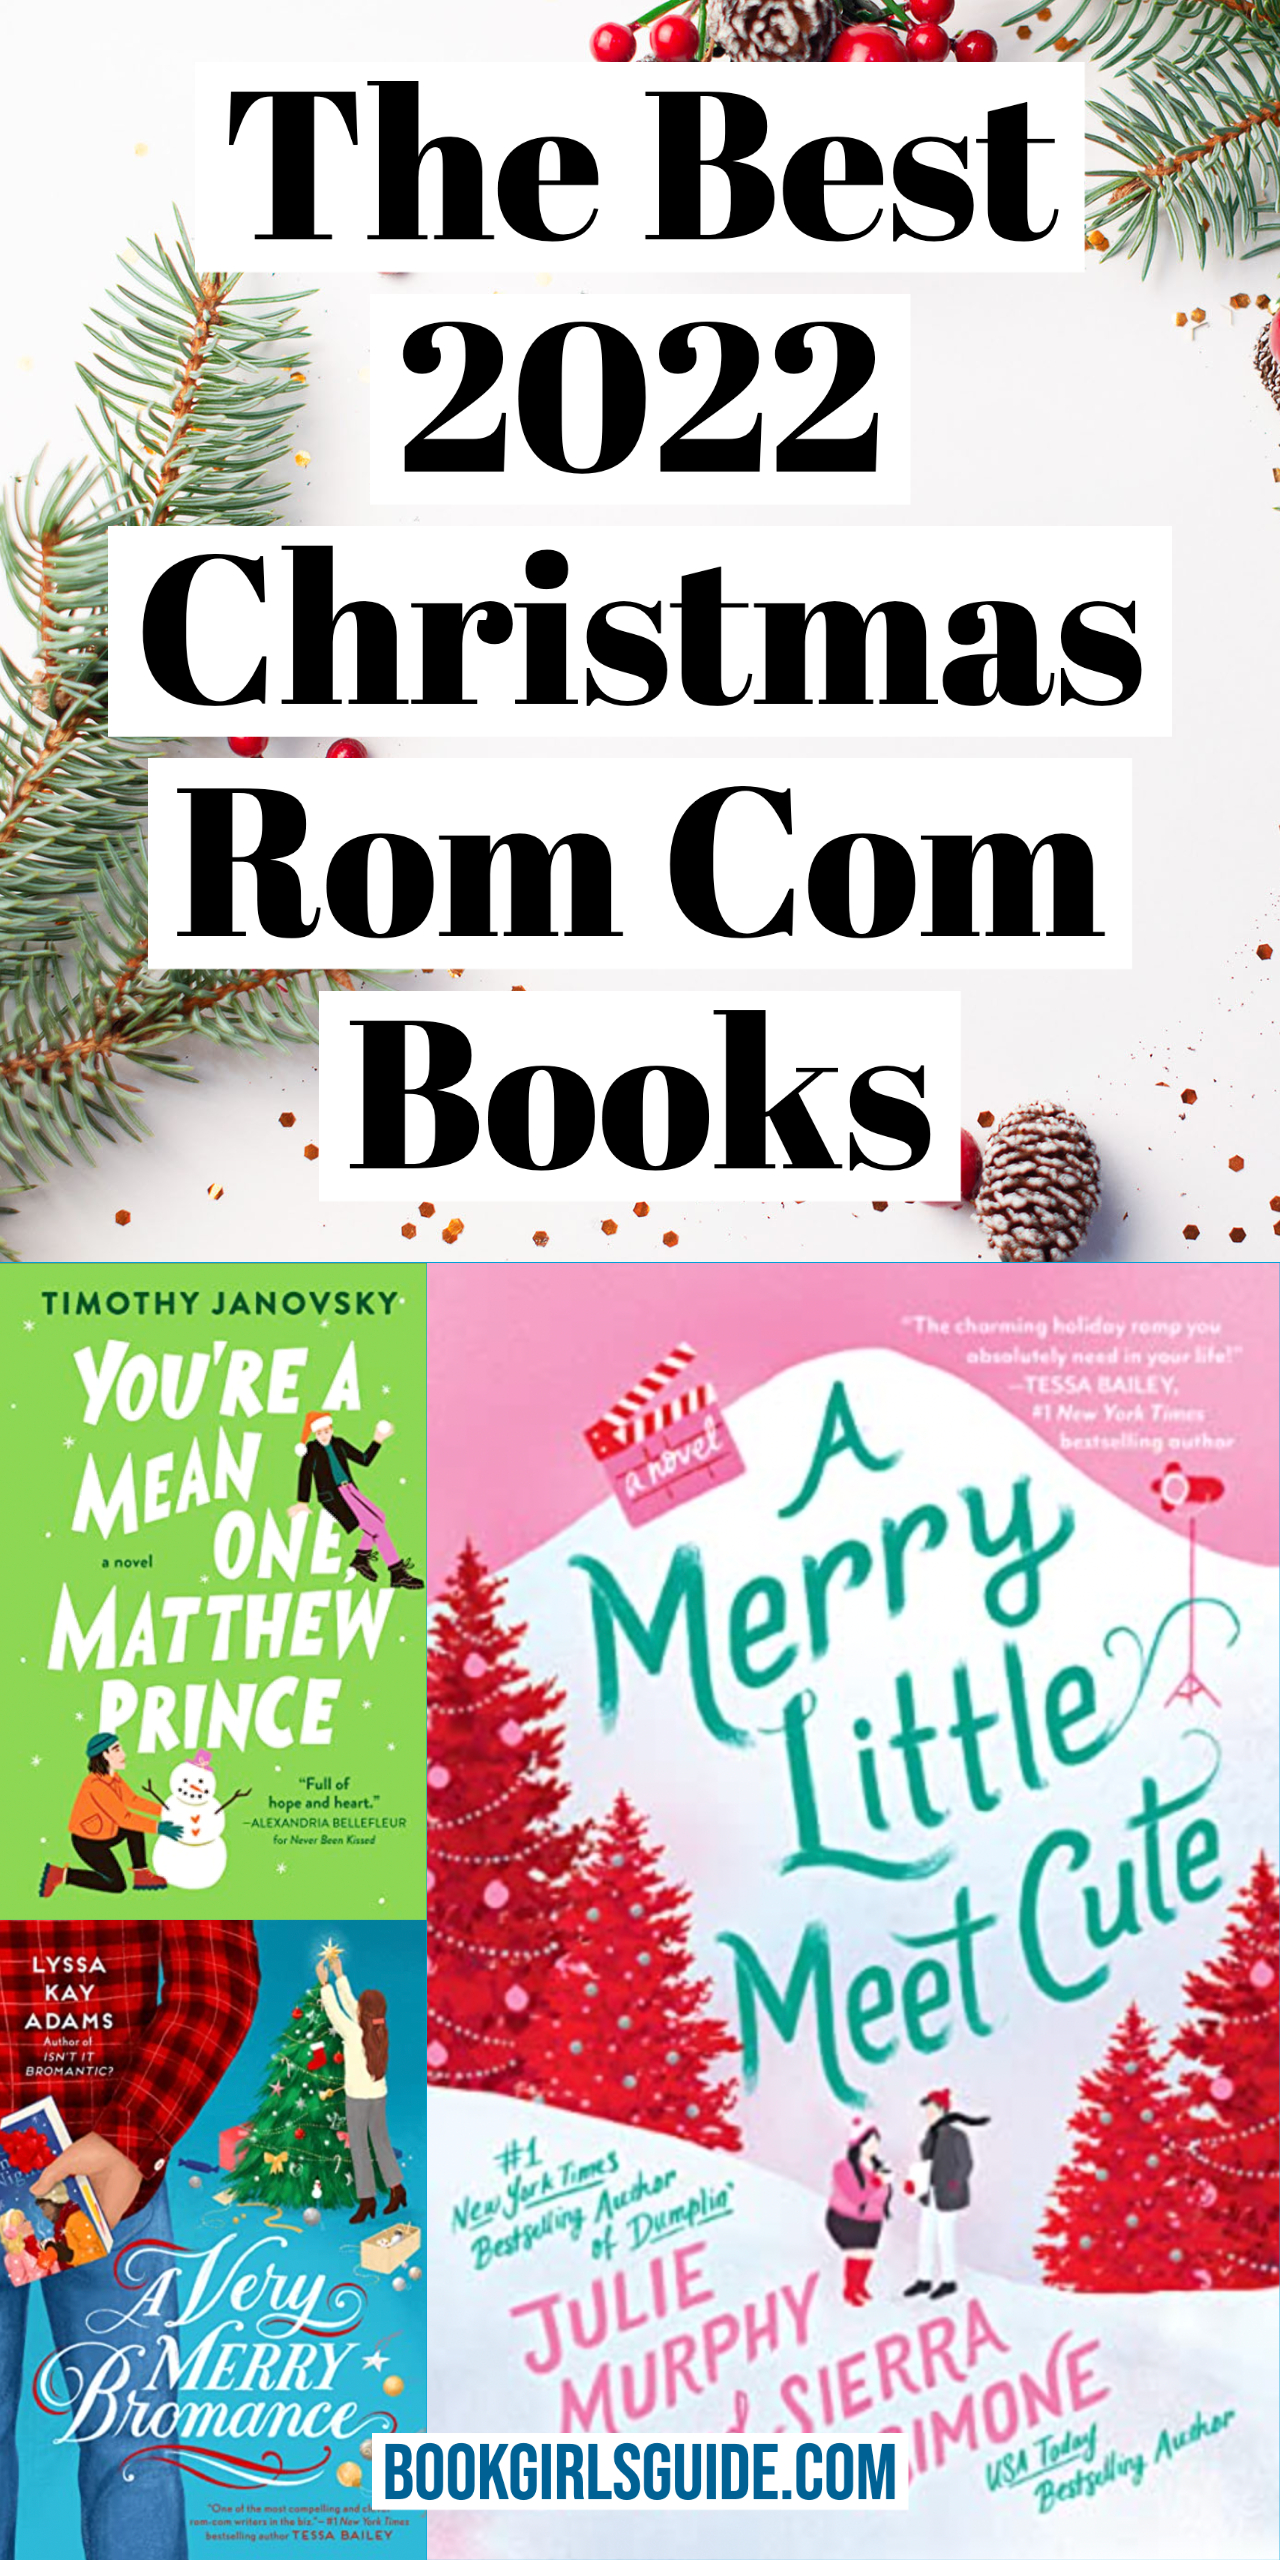 Image of Christmas Romance Book Covers & Text Reading "2022 Christmas Rom Com Books"